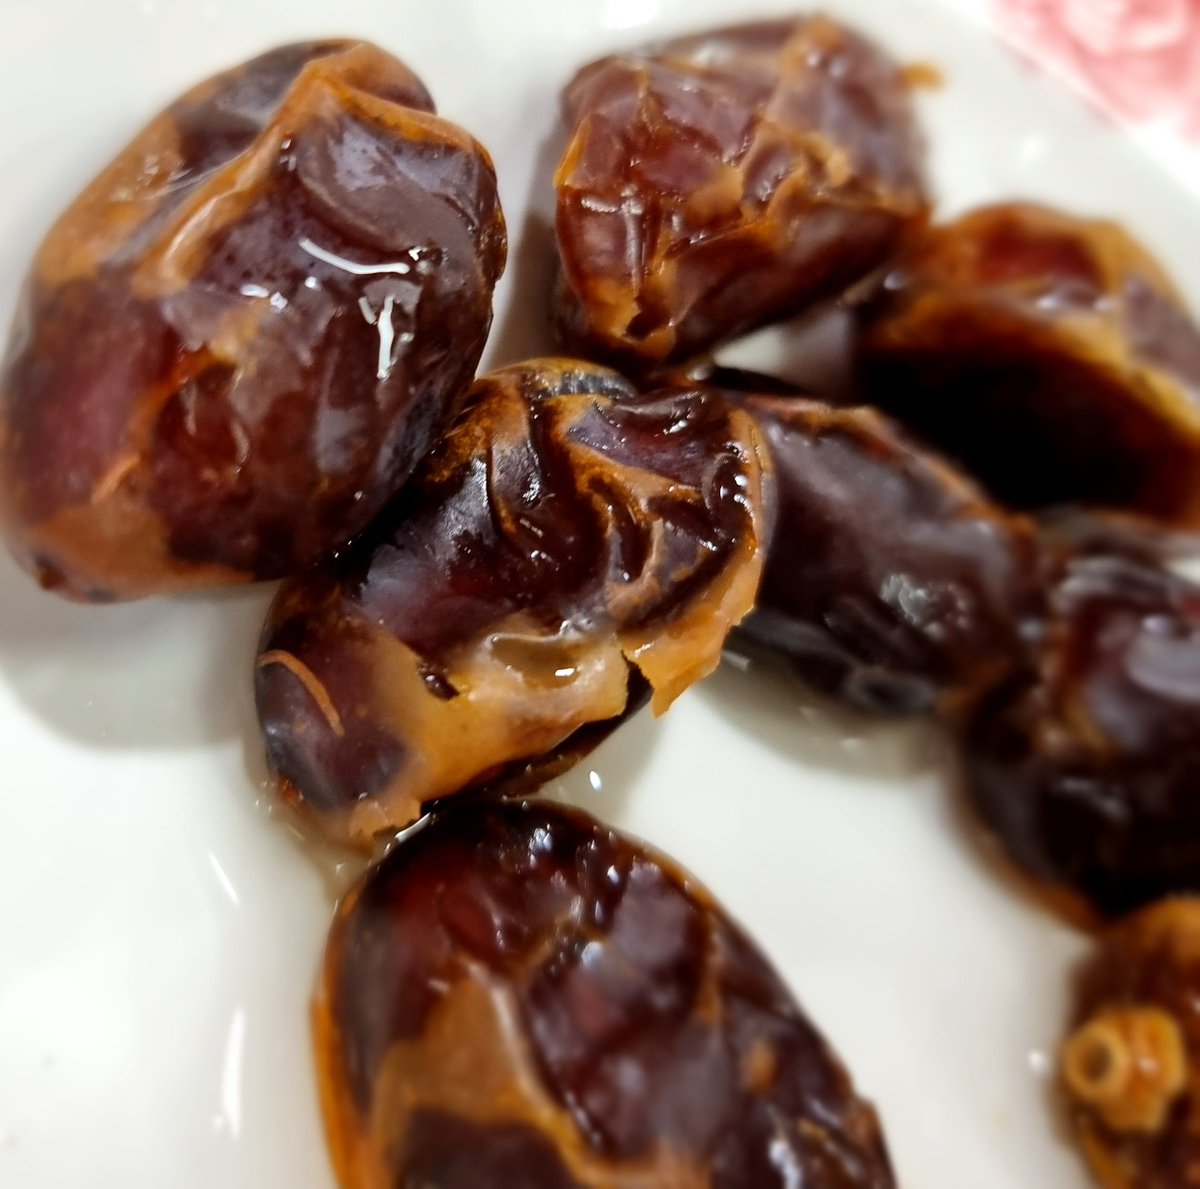 No fried items today
Unexpected #Barfi 
#Dates #FruitChart #AloChanaChat 
#Ramadan #Ramadan2023 #RamadanKareem